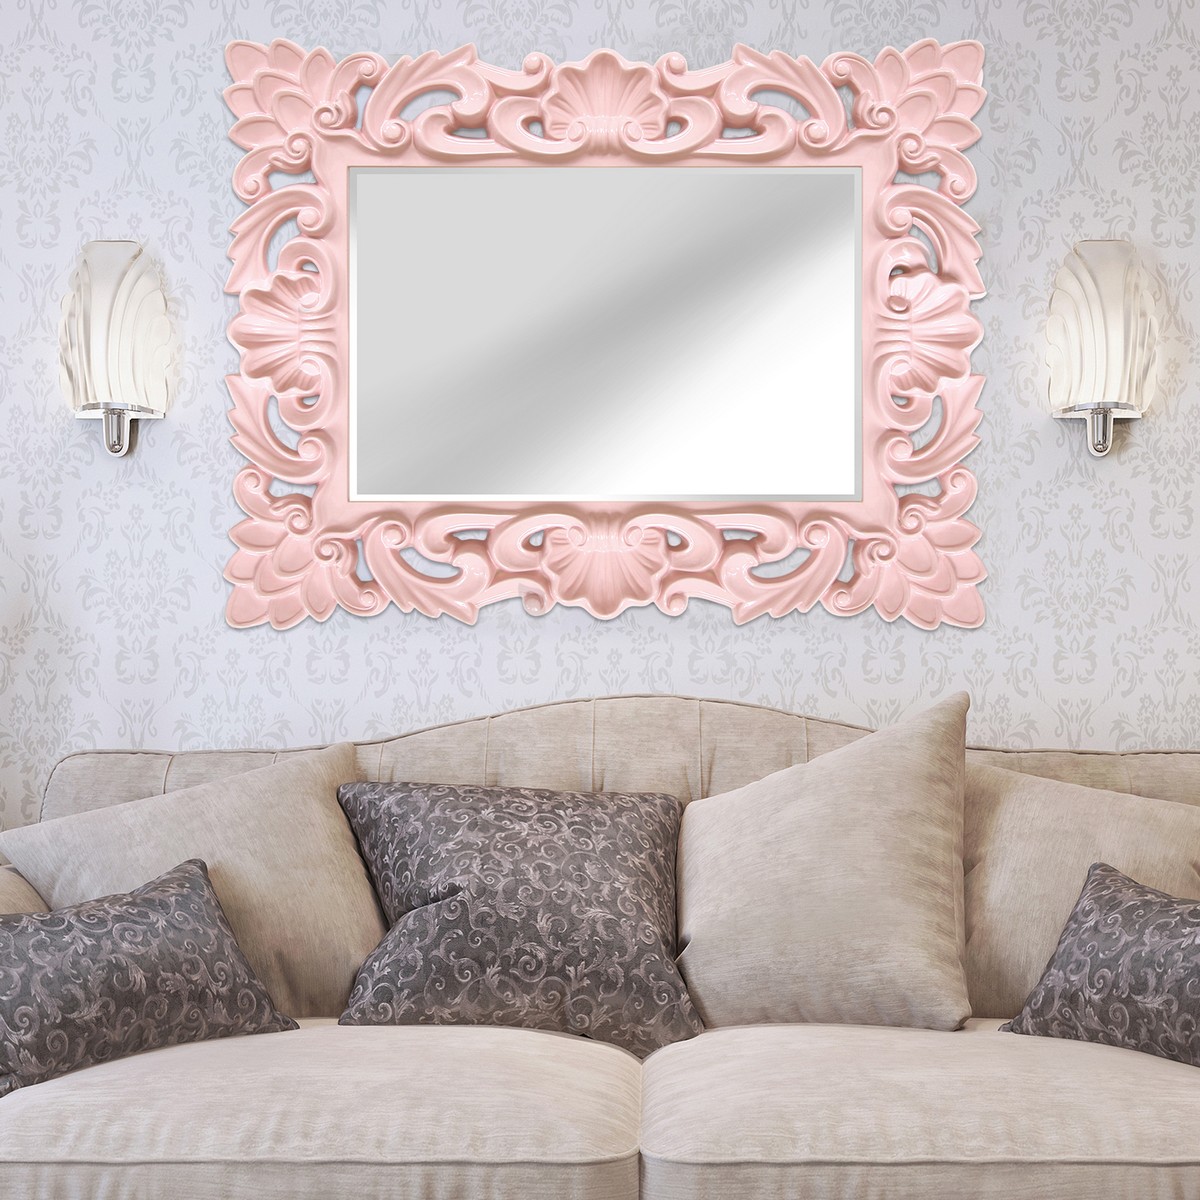 Stratton Home Decor Blush Elegant Ornate Wall Mirror - Blush